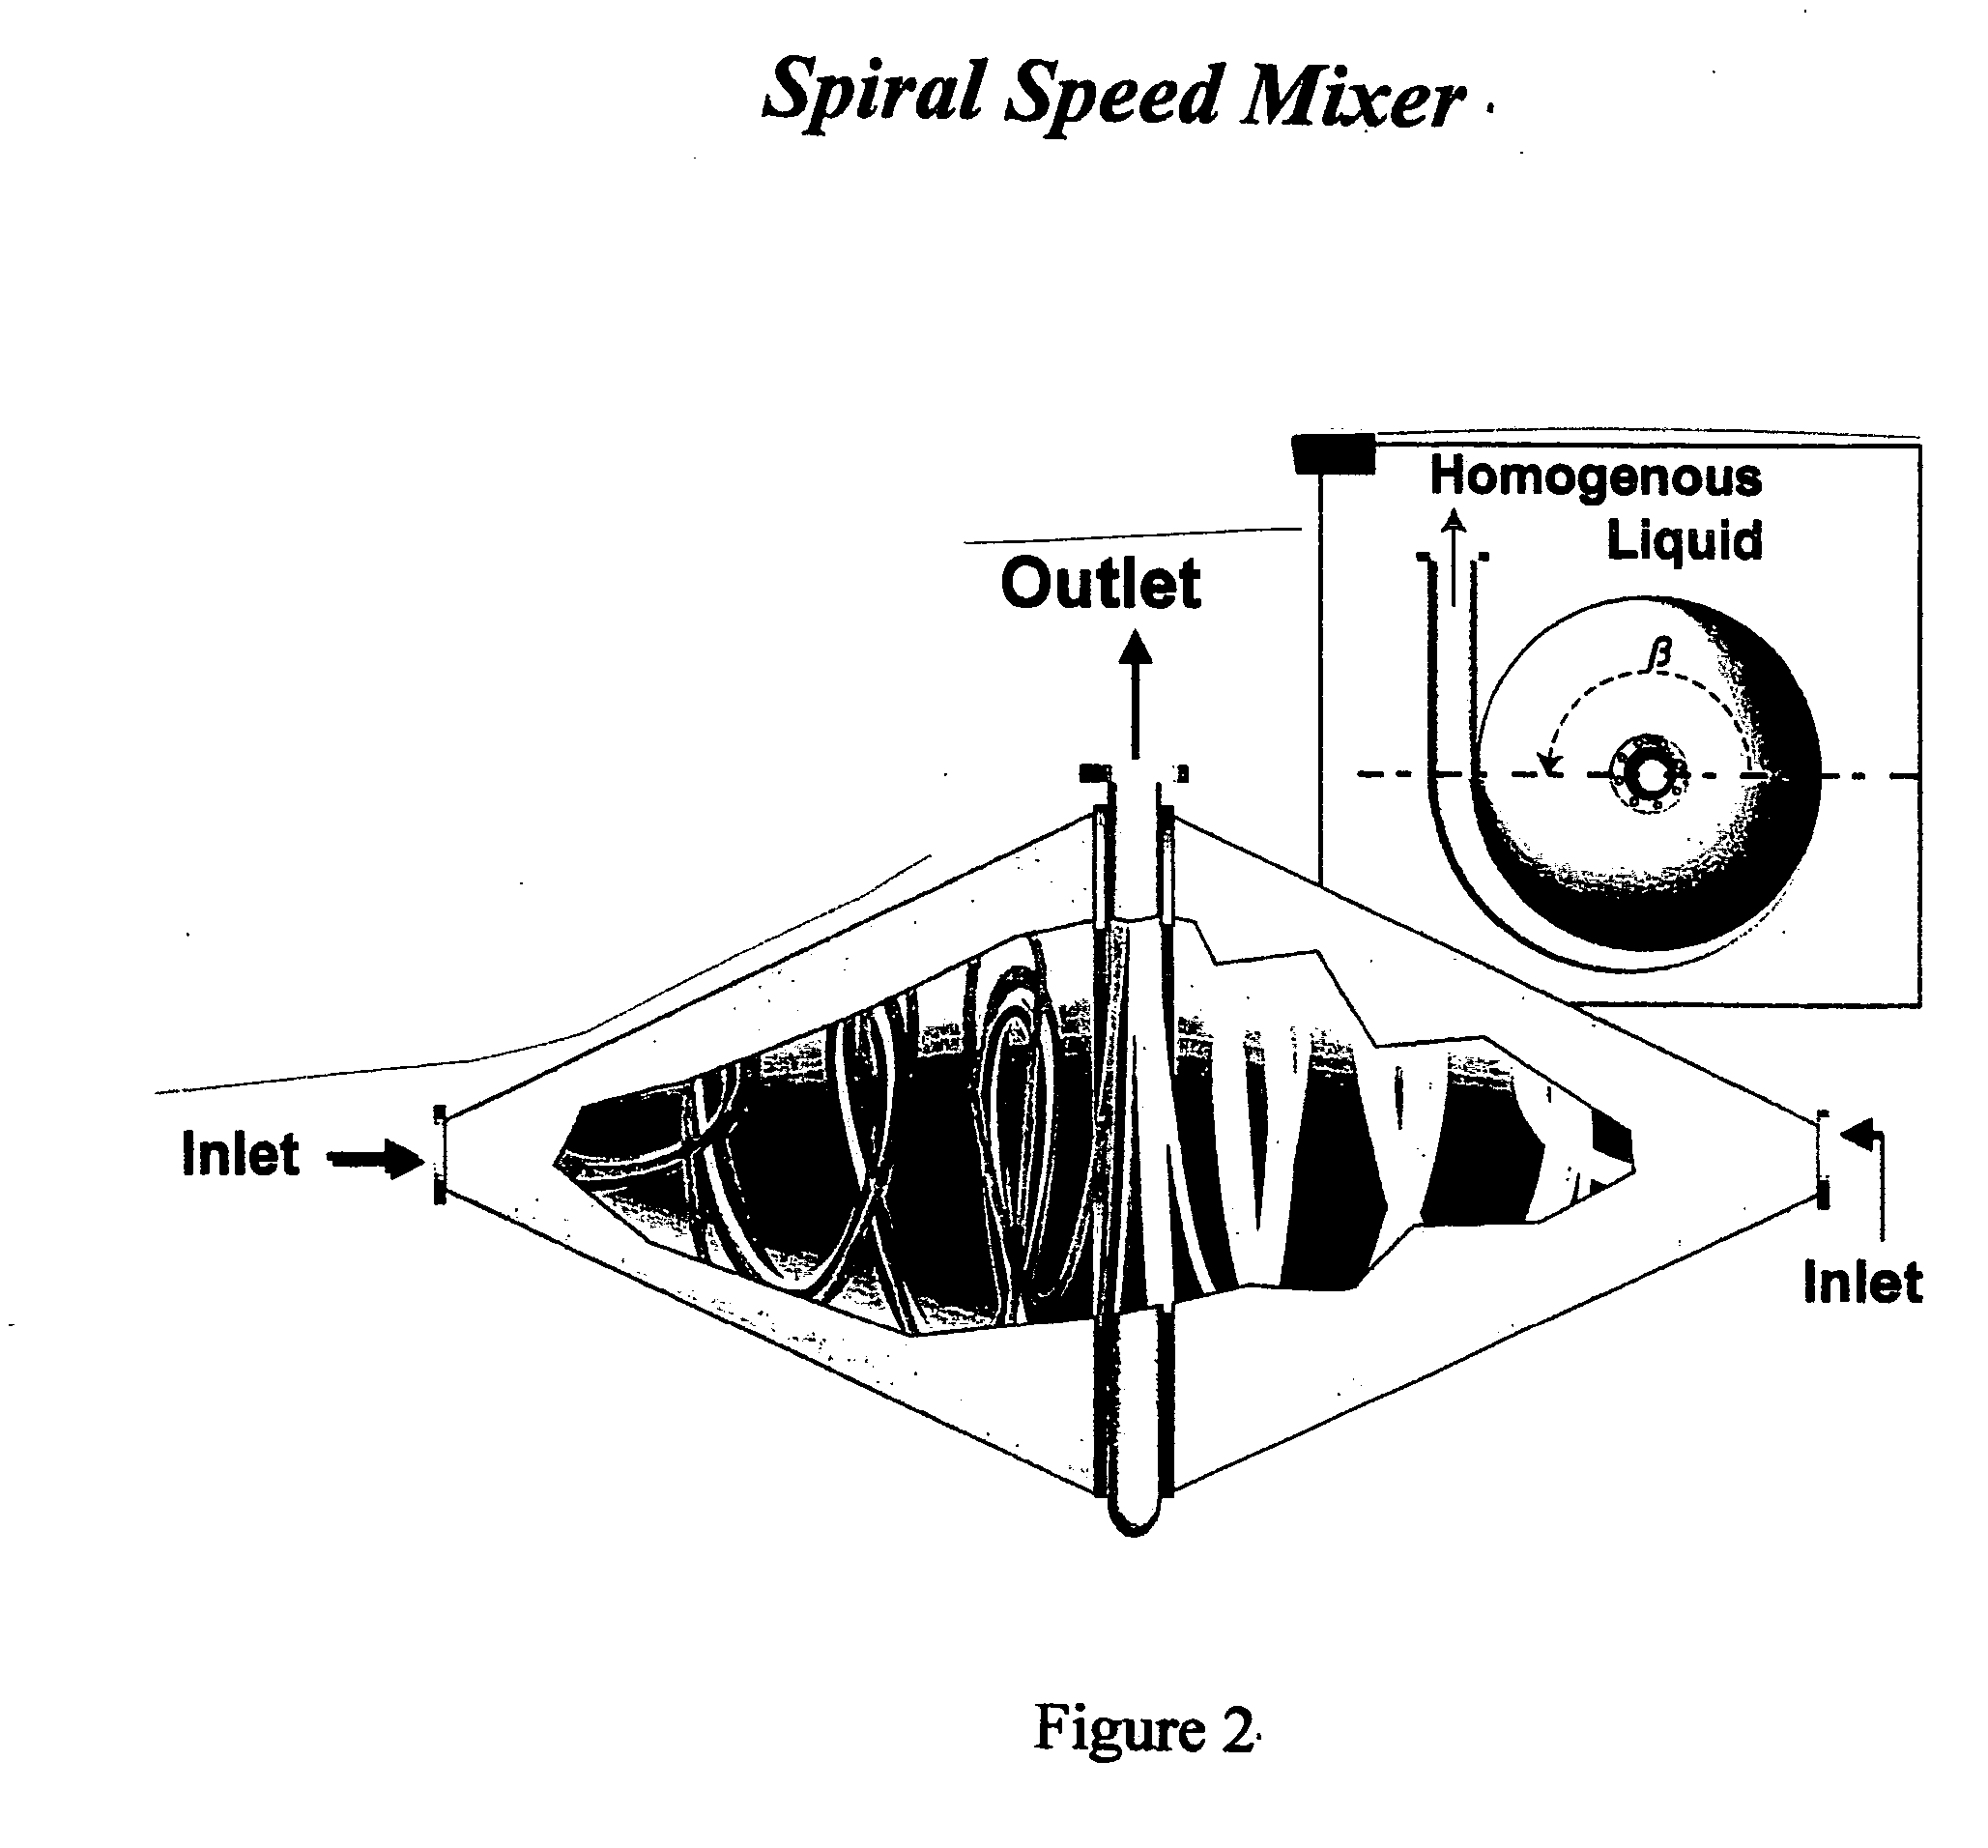 Spiral Speed Separator (SSS)